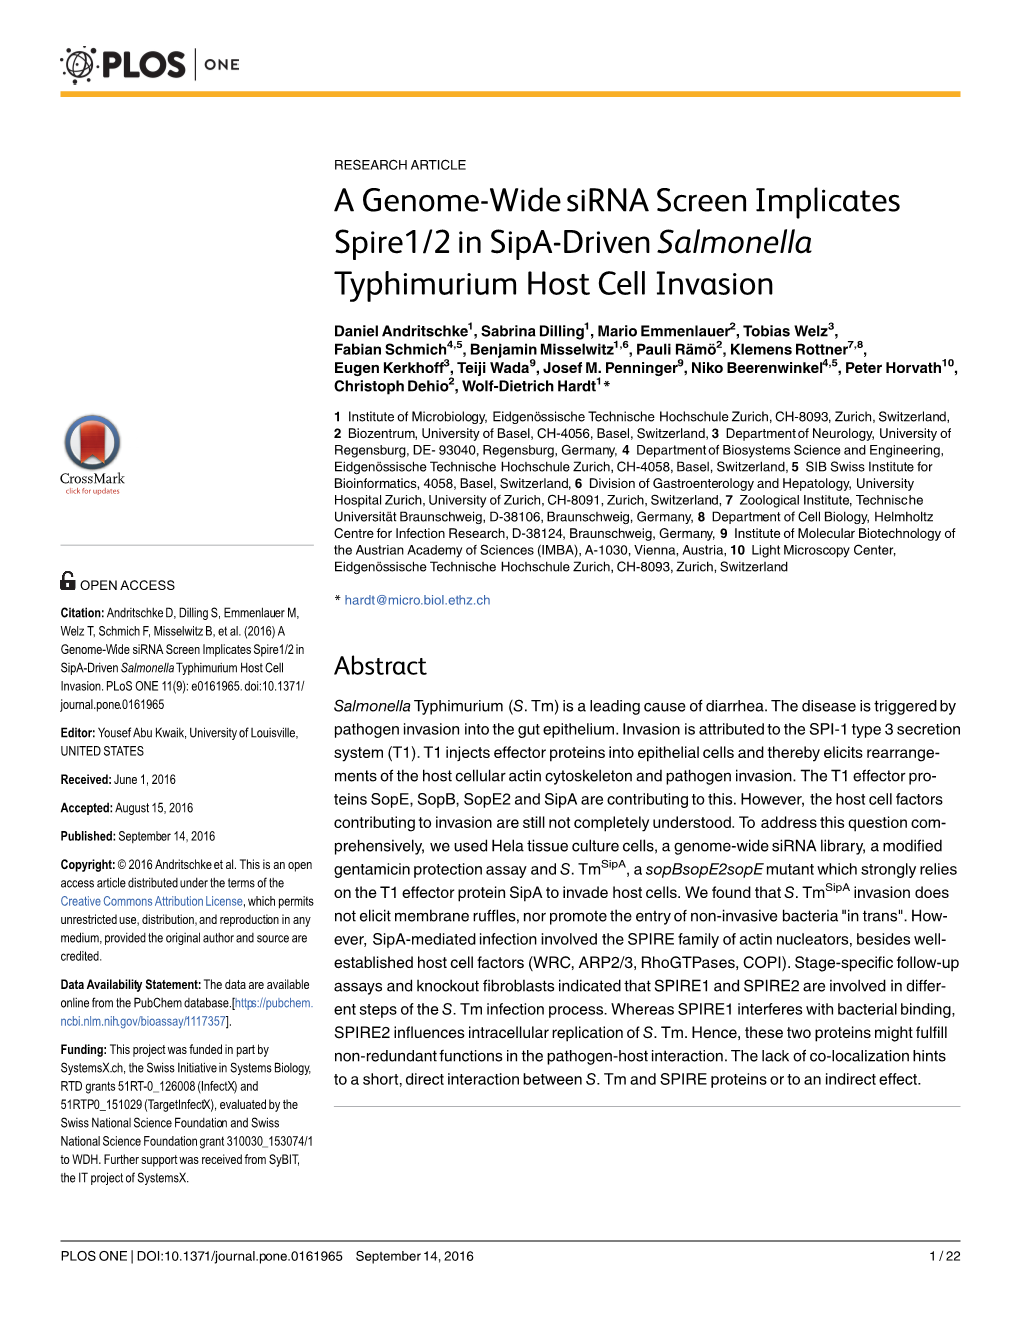 A Genome-Wide Sirna Screen Implicates Spire1/2 in Sipa-Driven Salmonella Typhimurium Host Cell Invasion